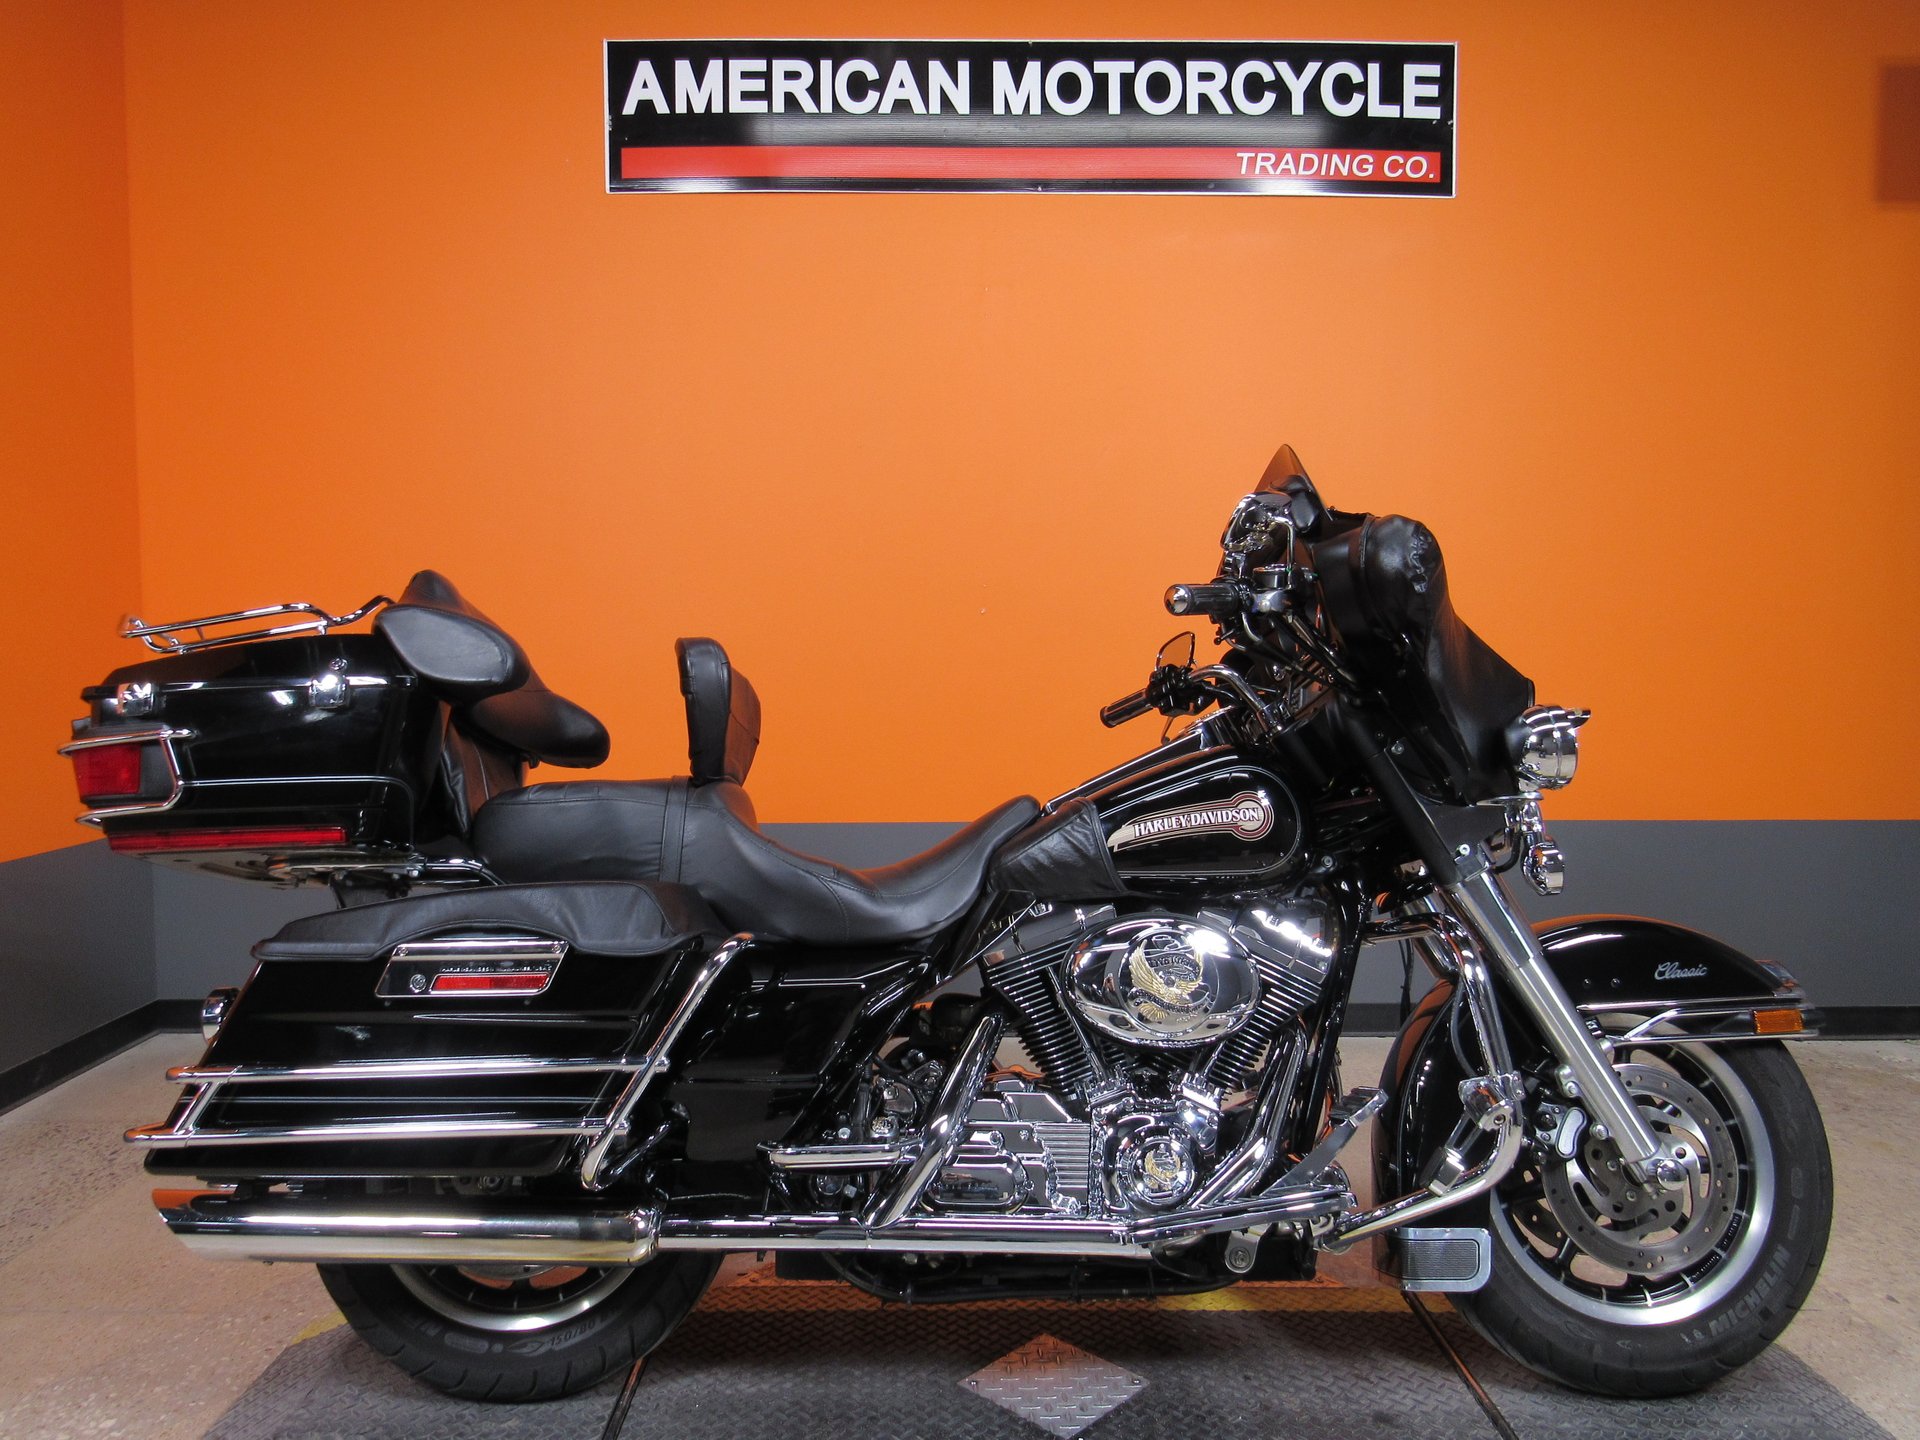 2007 Harley Davidson Electra Glide American Motorcycle Trading Company Used Harley Davidson Motorcycles